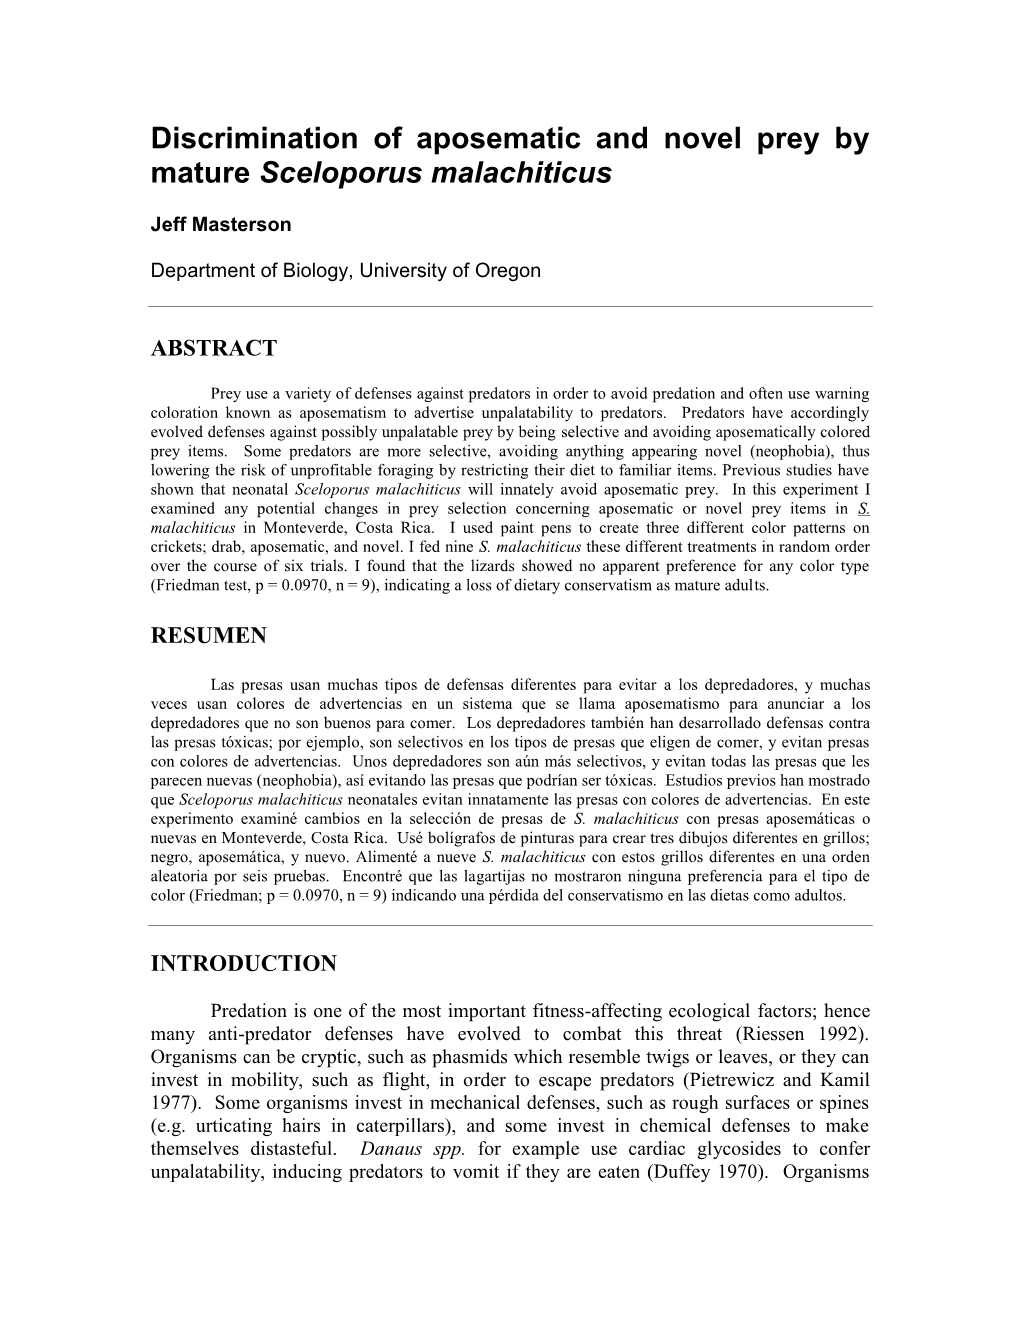 Discrimination of Aposematic and Novel Prey by Mature Sceloporus Malachiticus